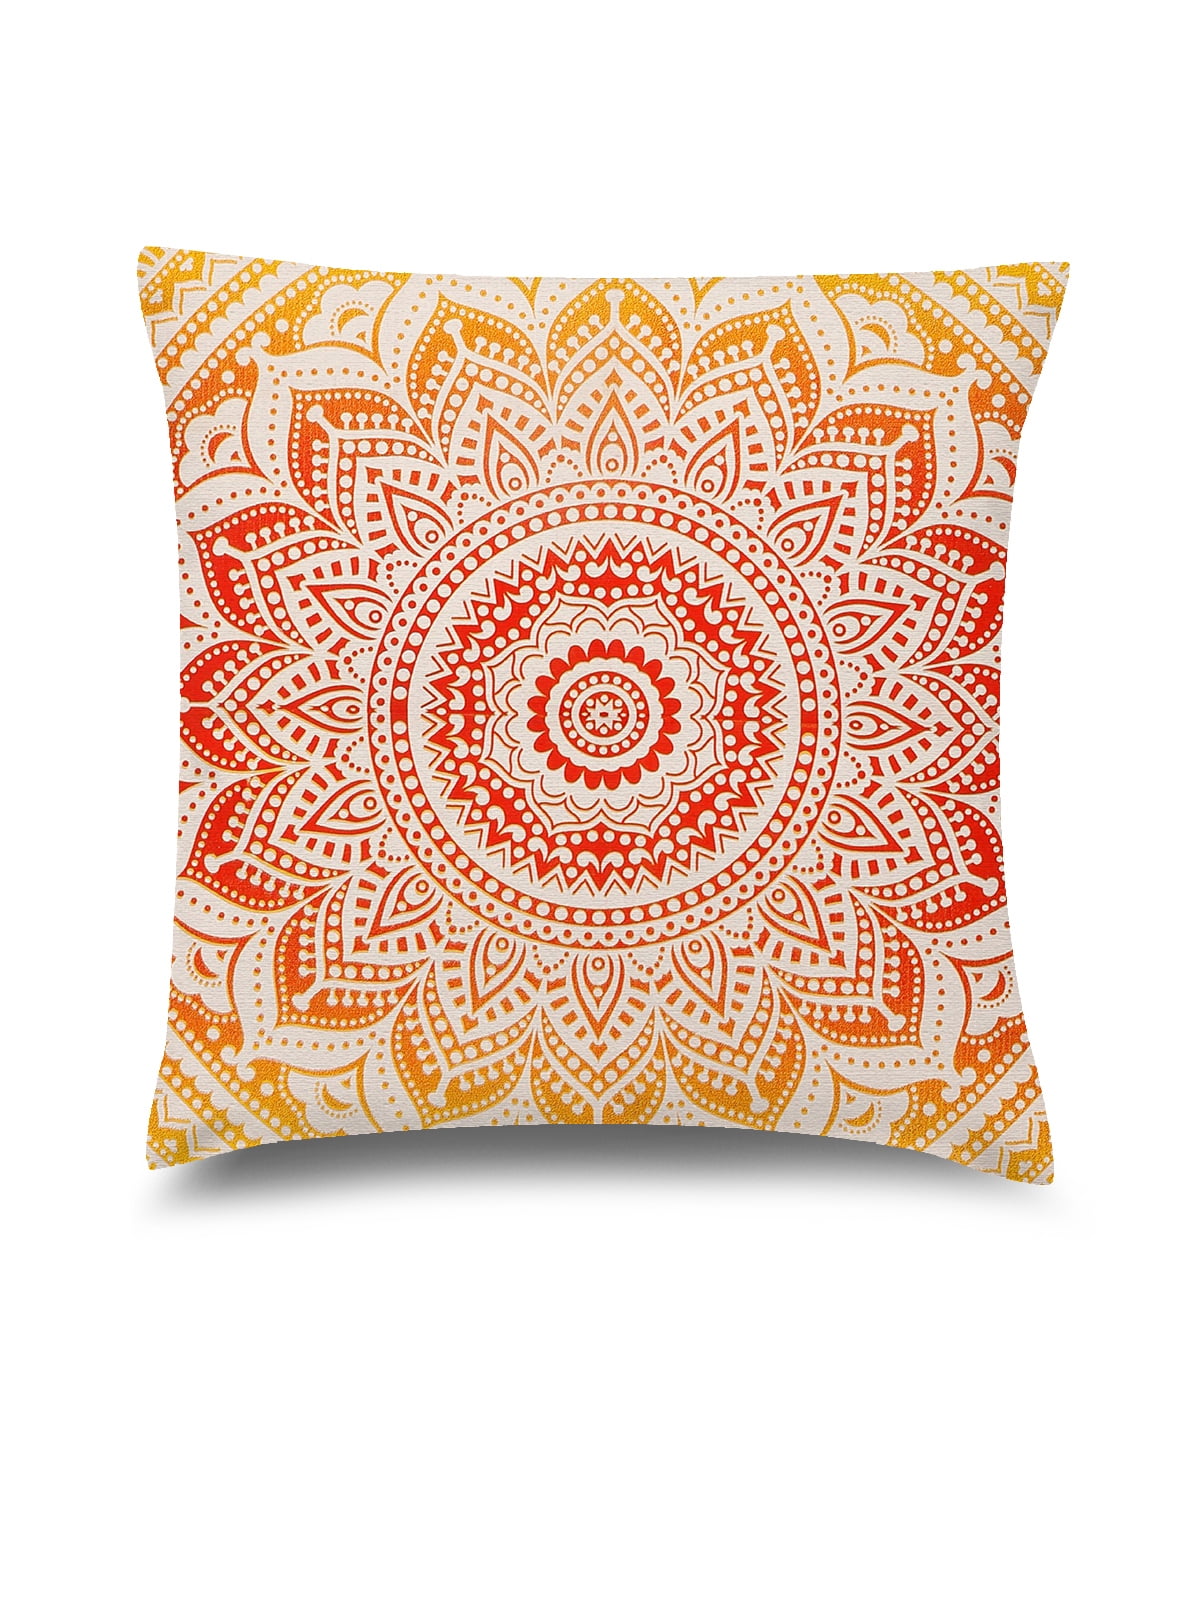 Indian Mandala Boho Pillow Case Sofa Waist Throw Cushion Cover Room Home Decor 